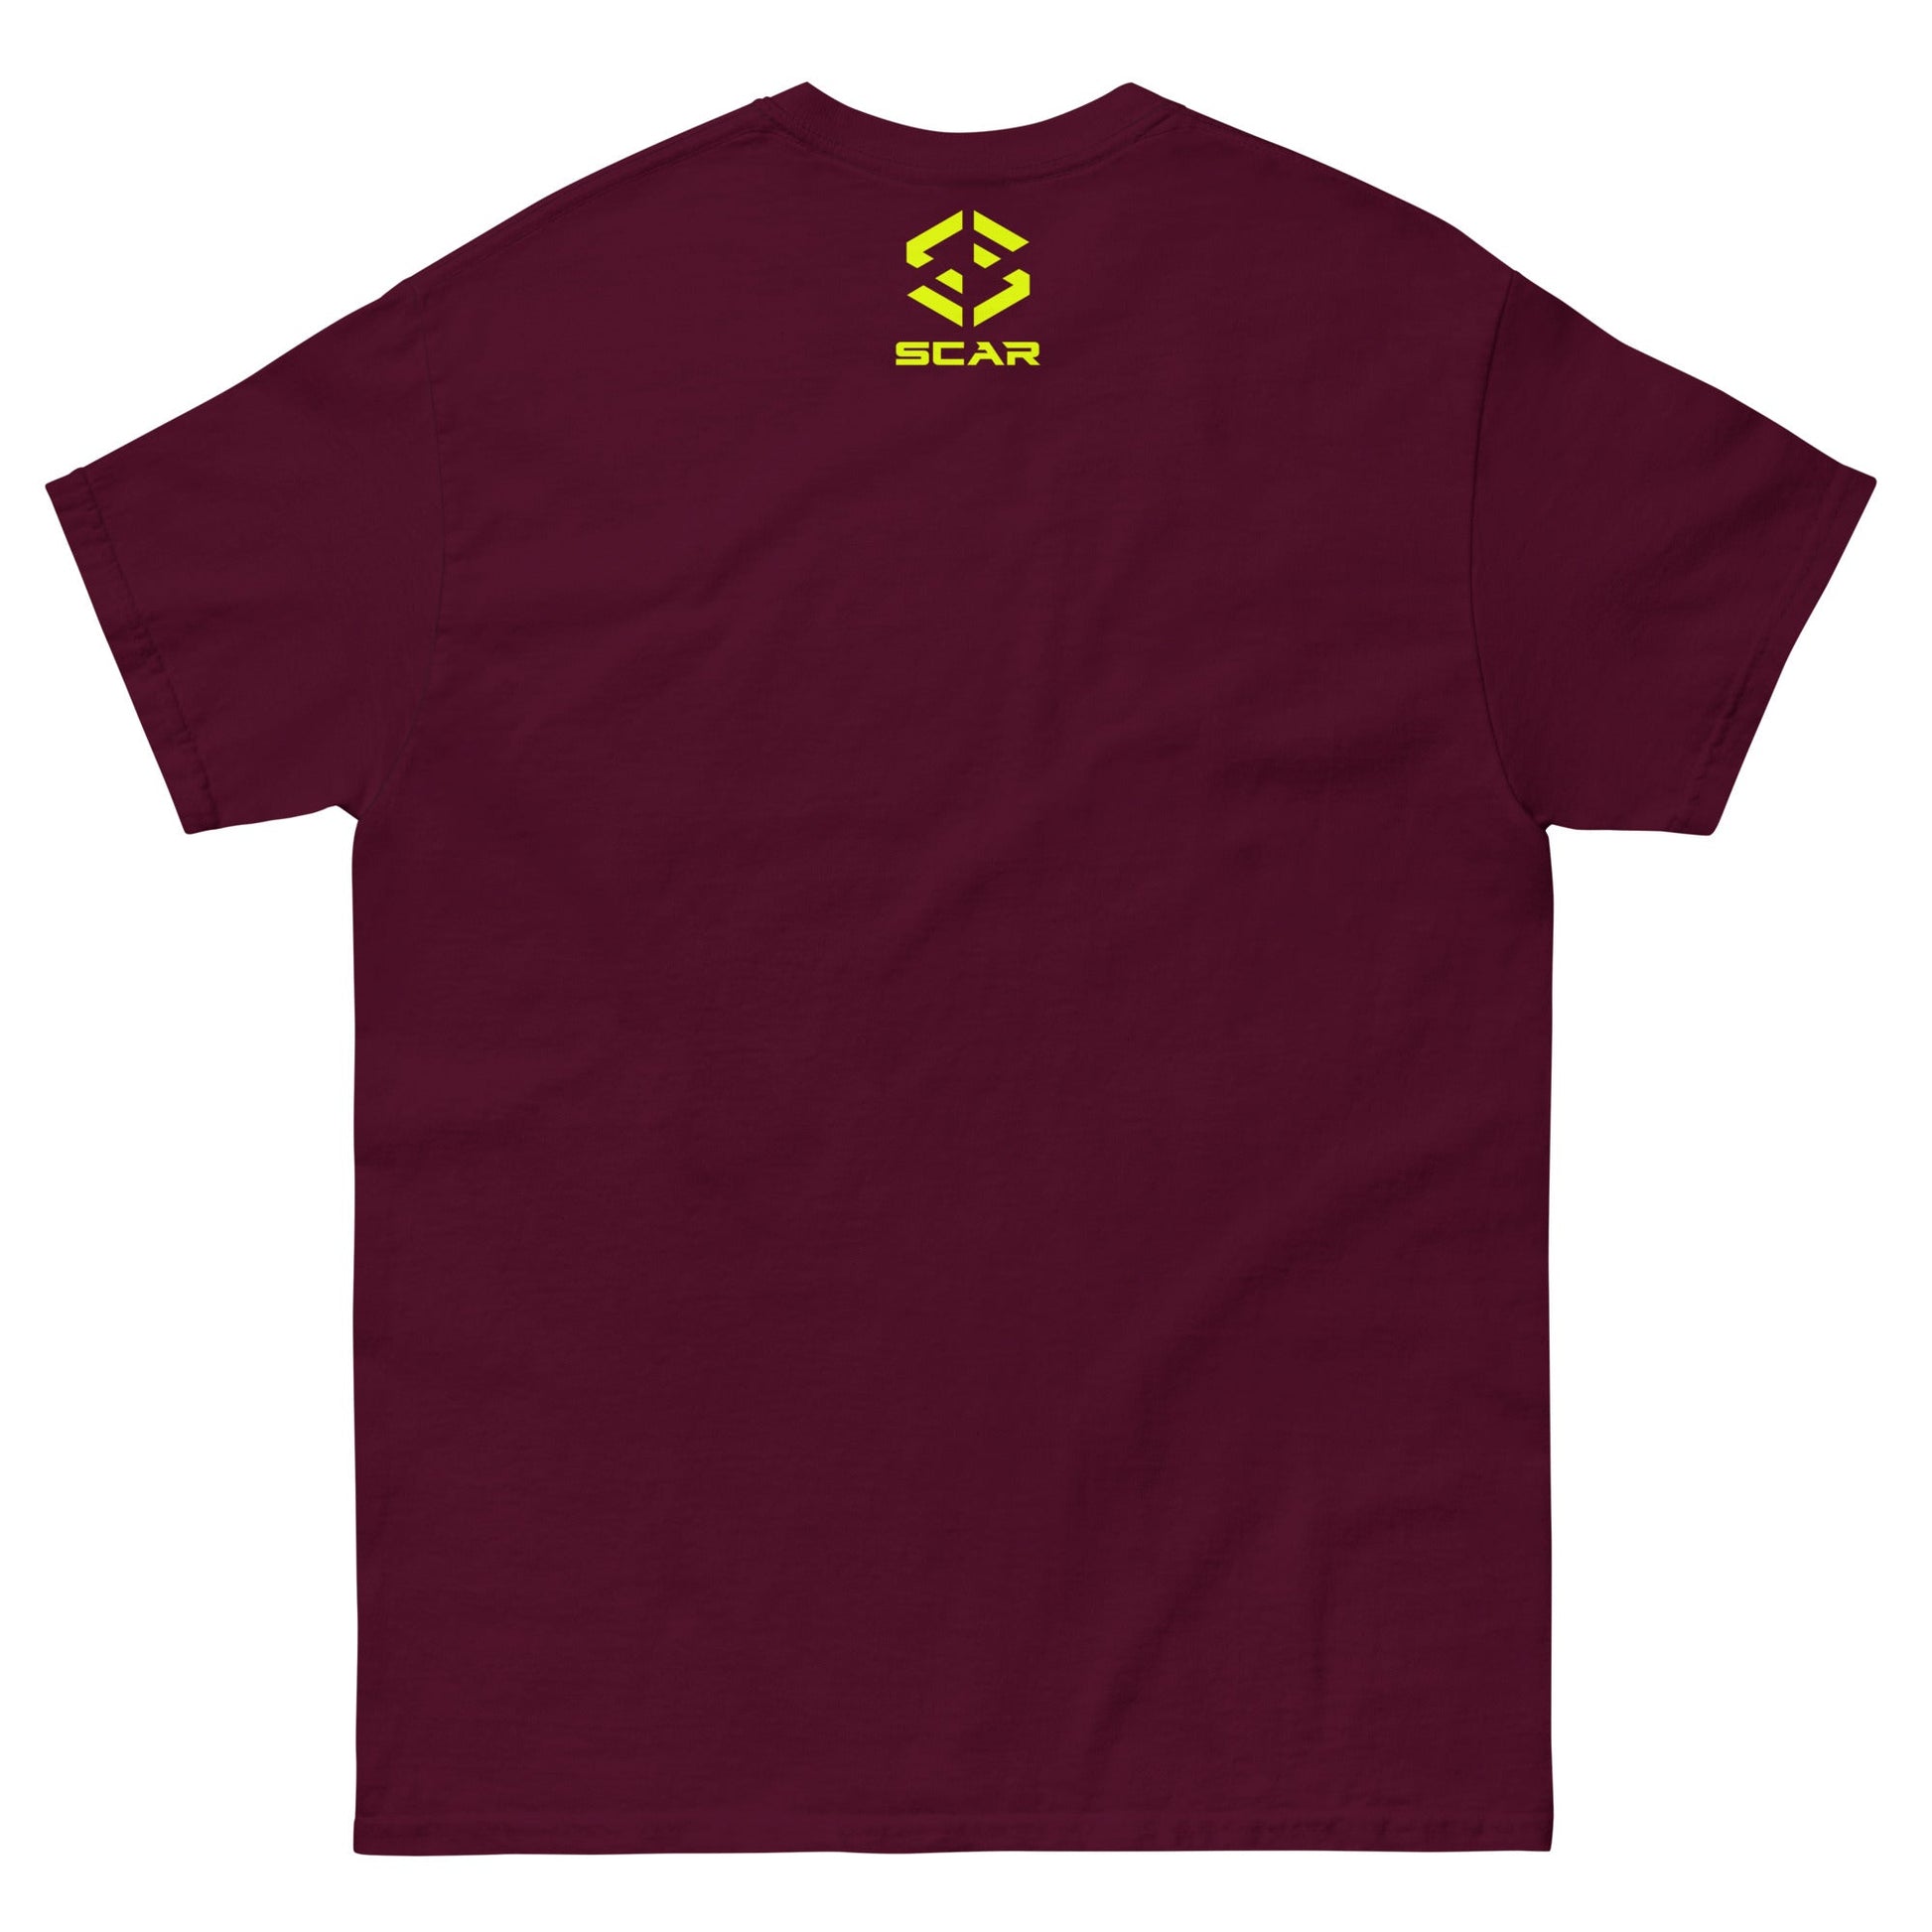 Scar Design T shirt Gold Viking Helmet T-shirt